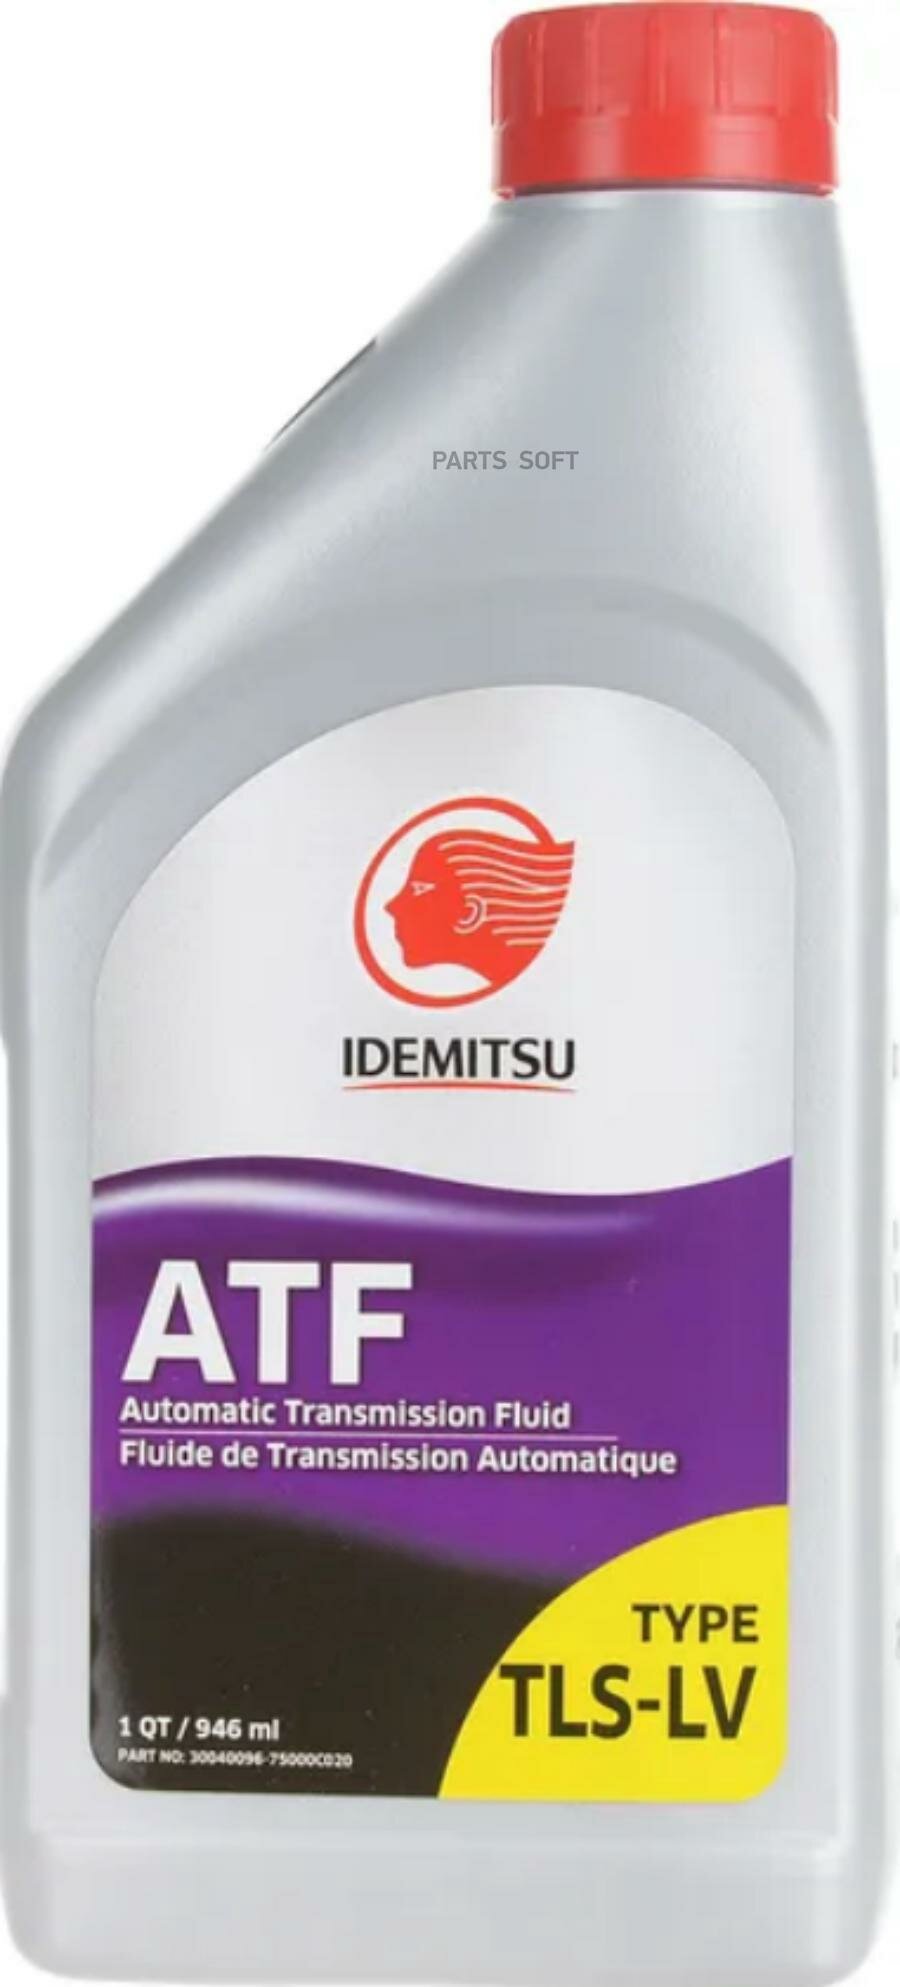 Масло трансмиссионное ATF TYPE TLS-LV (946ml) Аналог 10114-042B IDEMITSU / арт. 30040096750 - (1 шт)